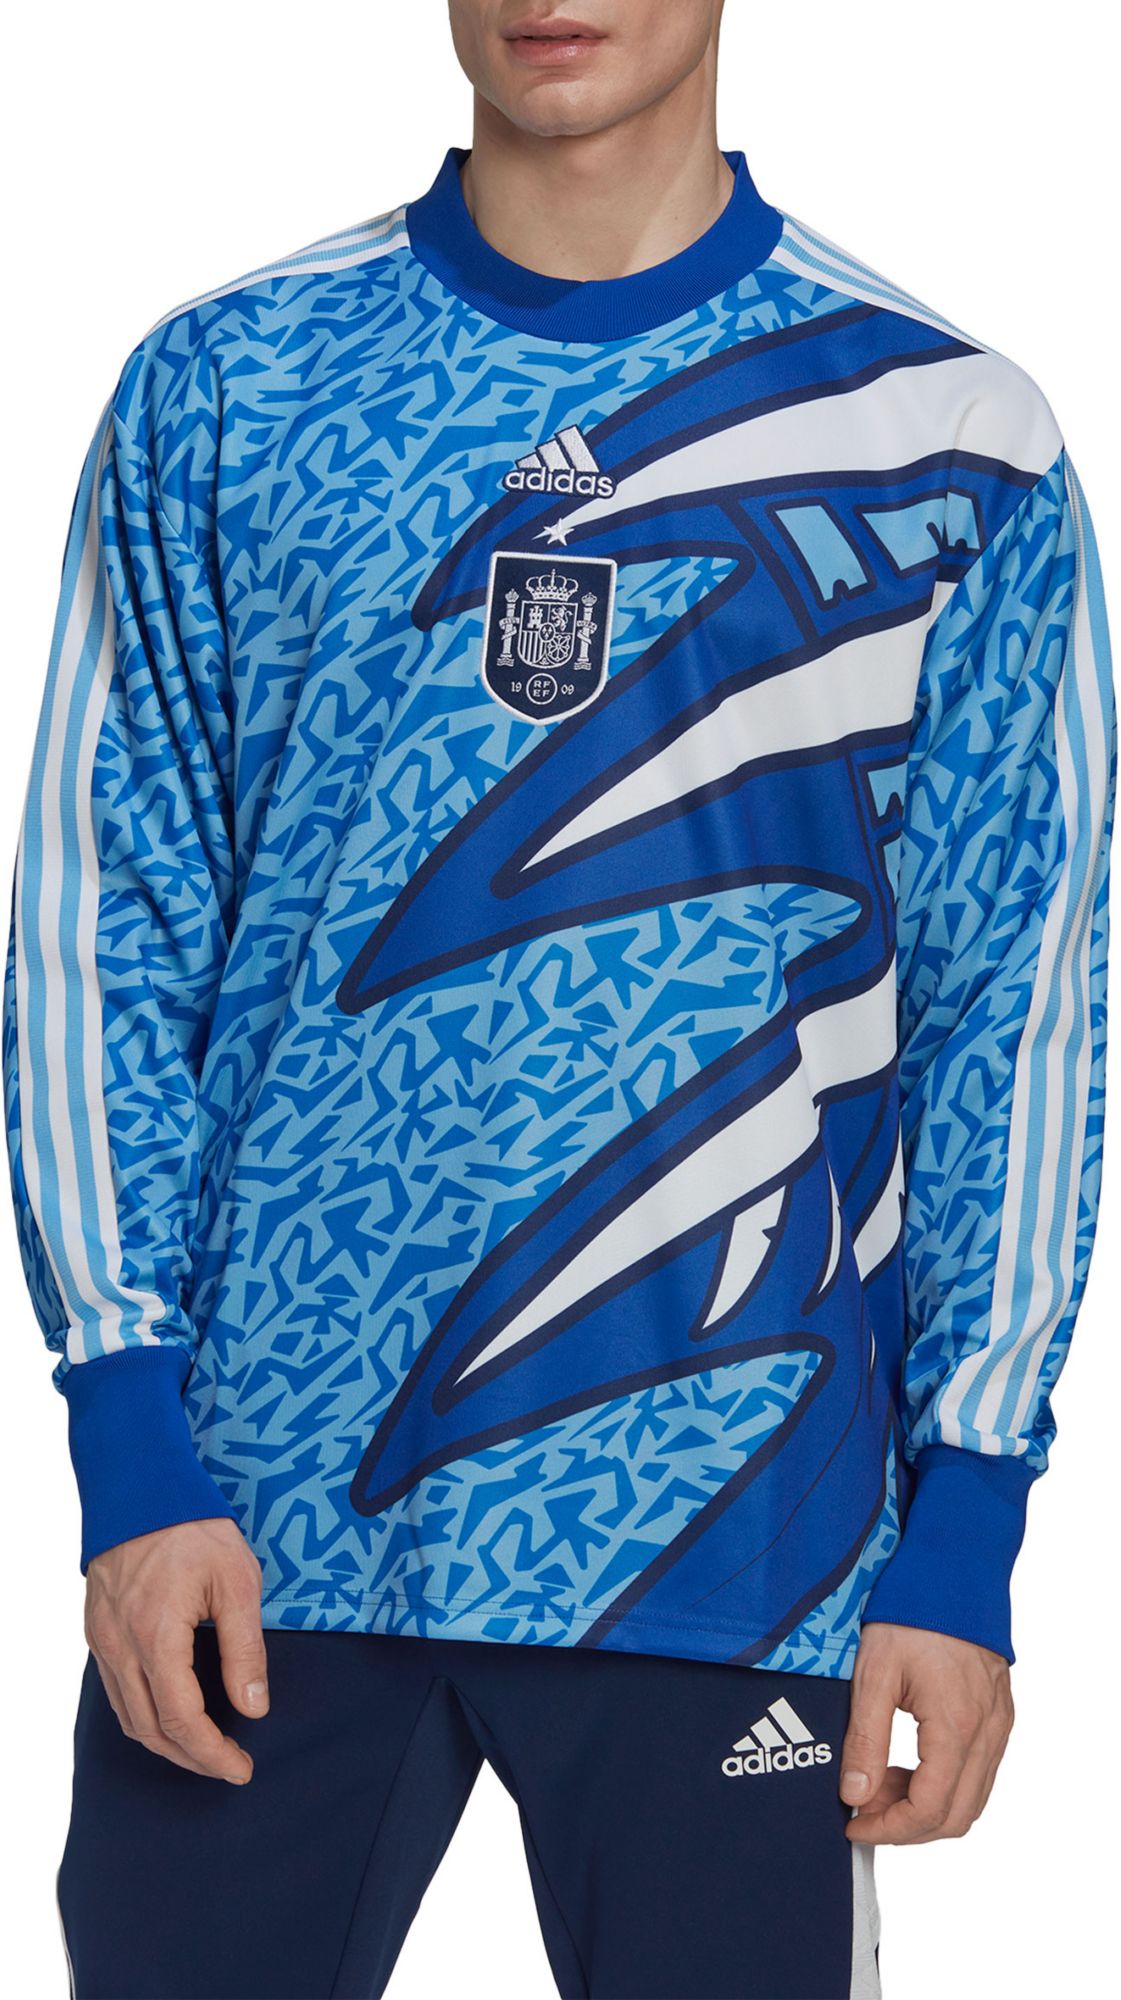 argentina goalkeeper kit